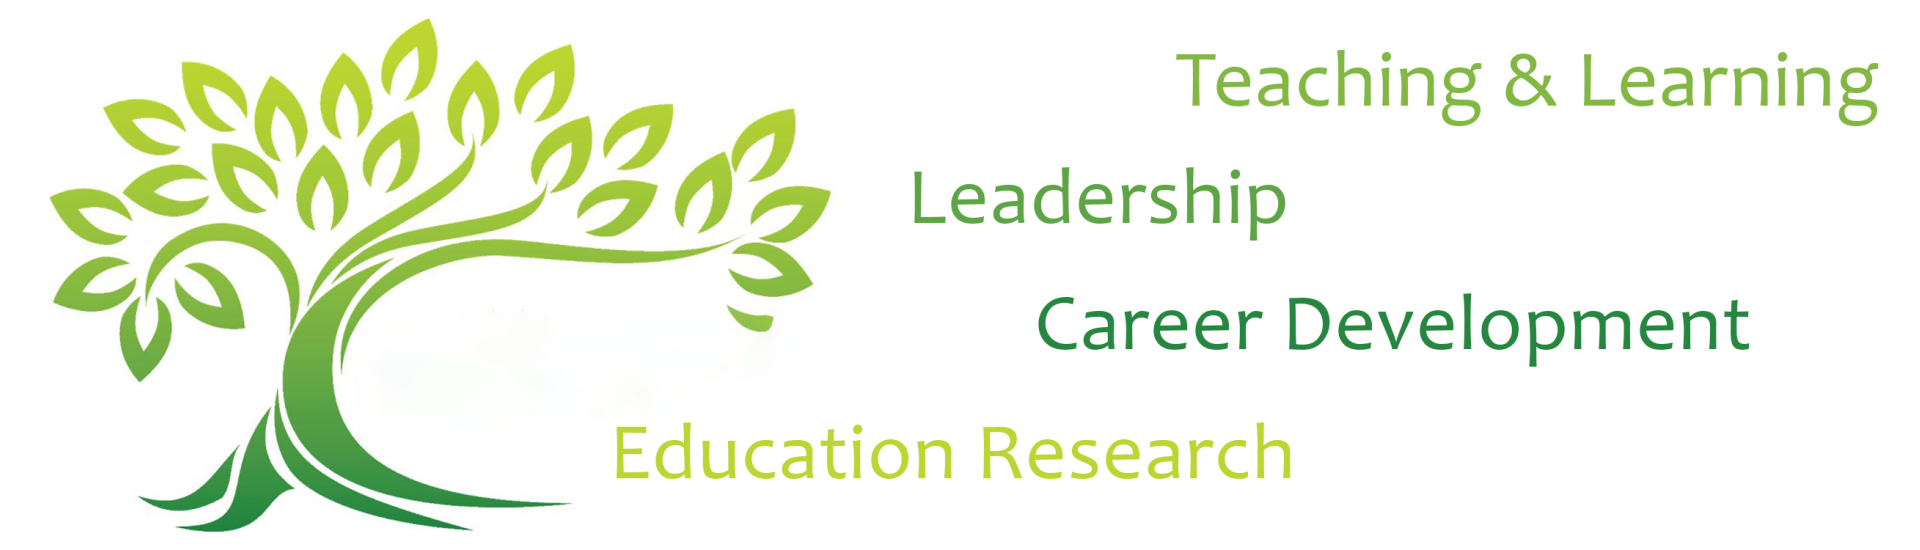 Teaching & Learning; Leadership; Education Research; Career Development